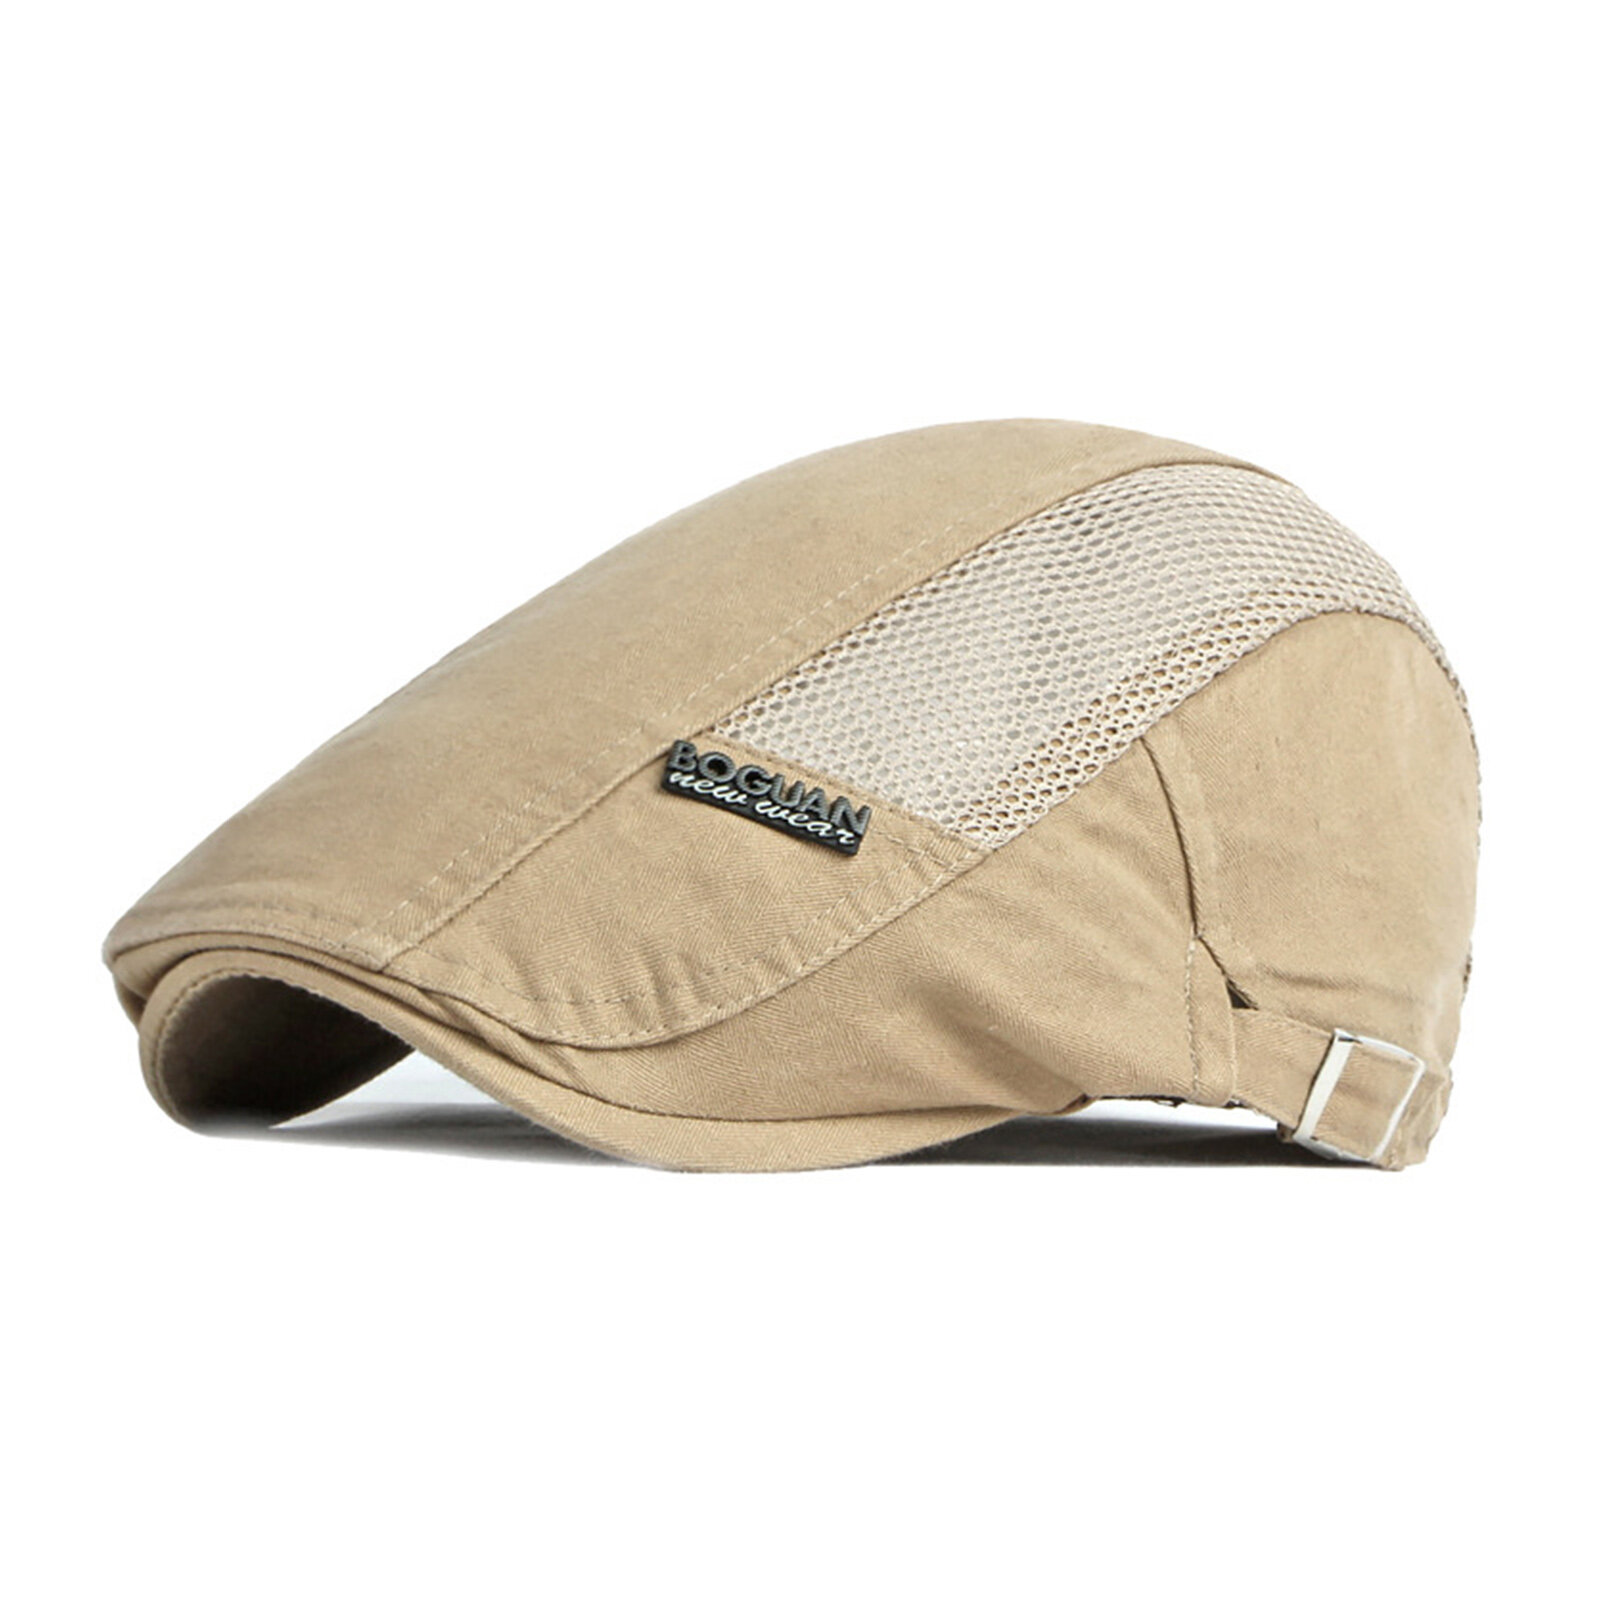 

Menico Men's Cotton Breathable Shade Short Brim Casual Retro Edgy Hat Beret Flat Cap